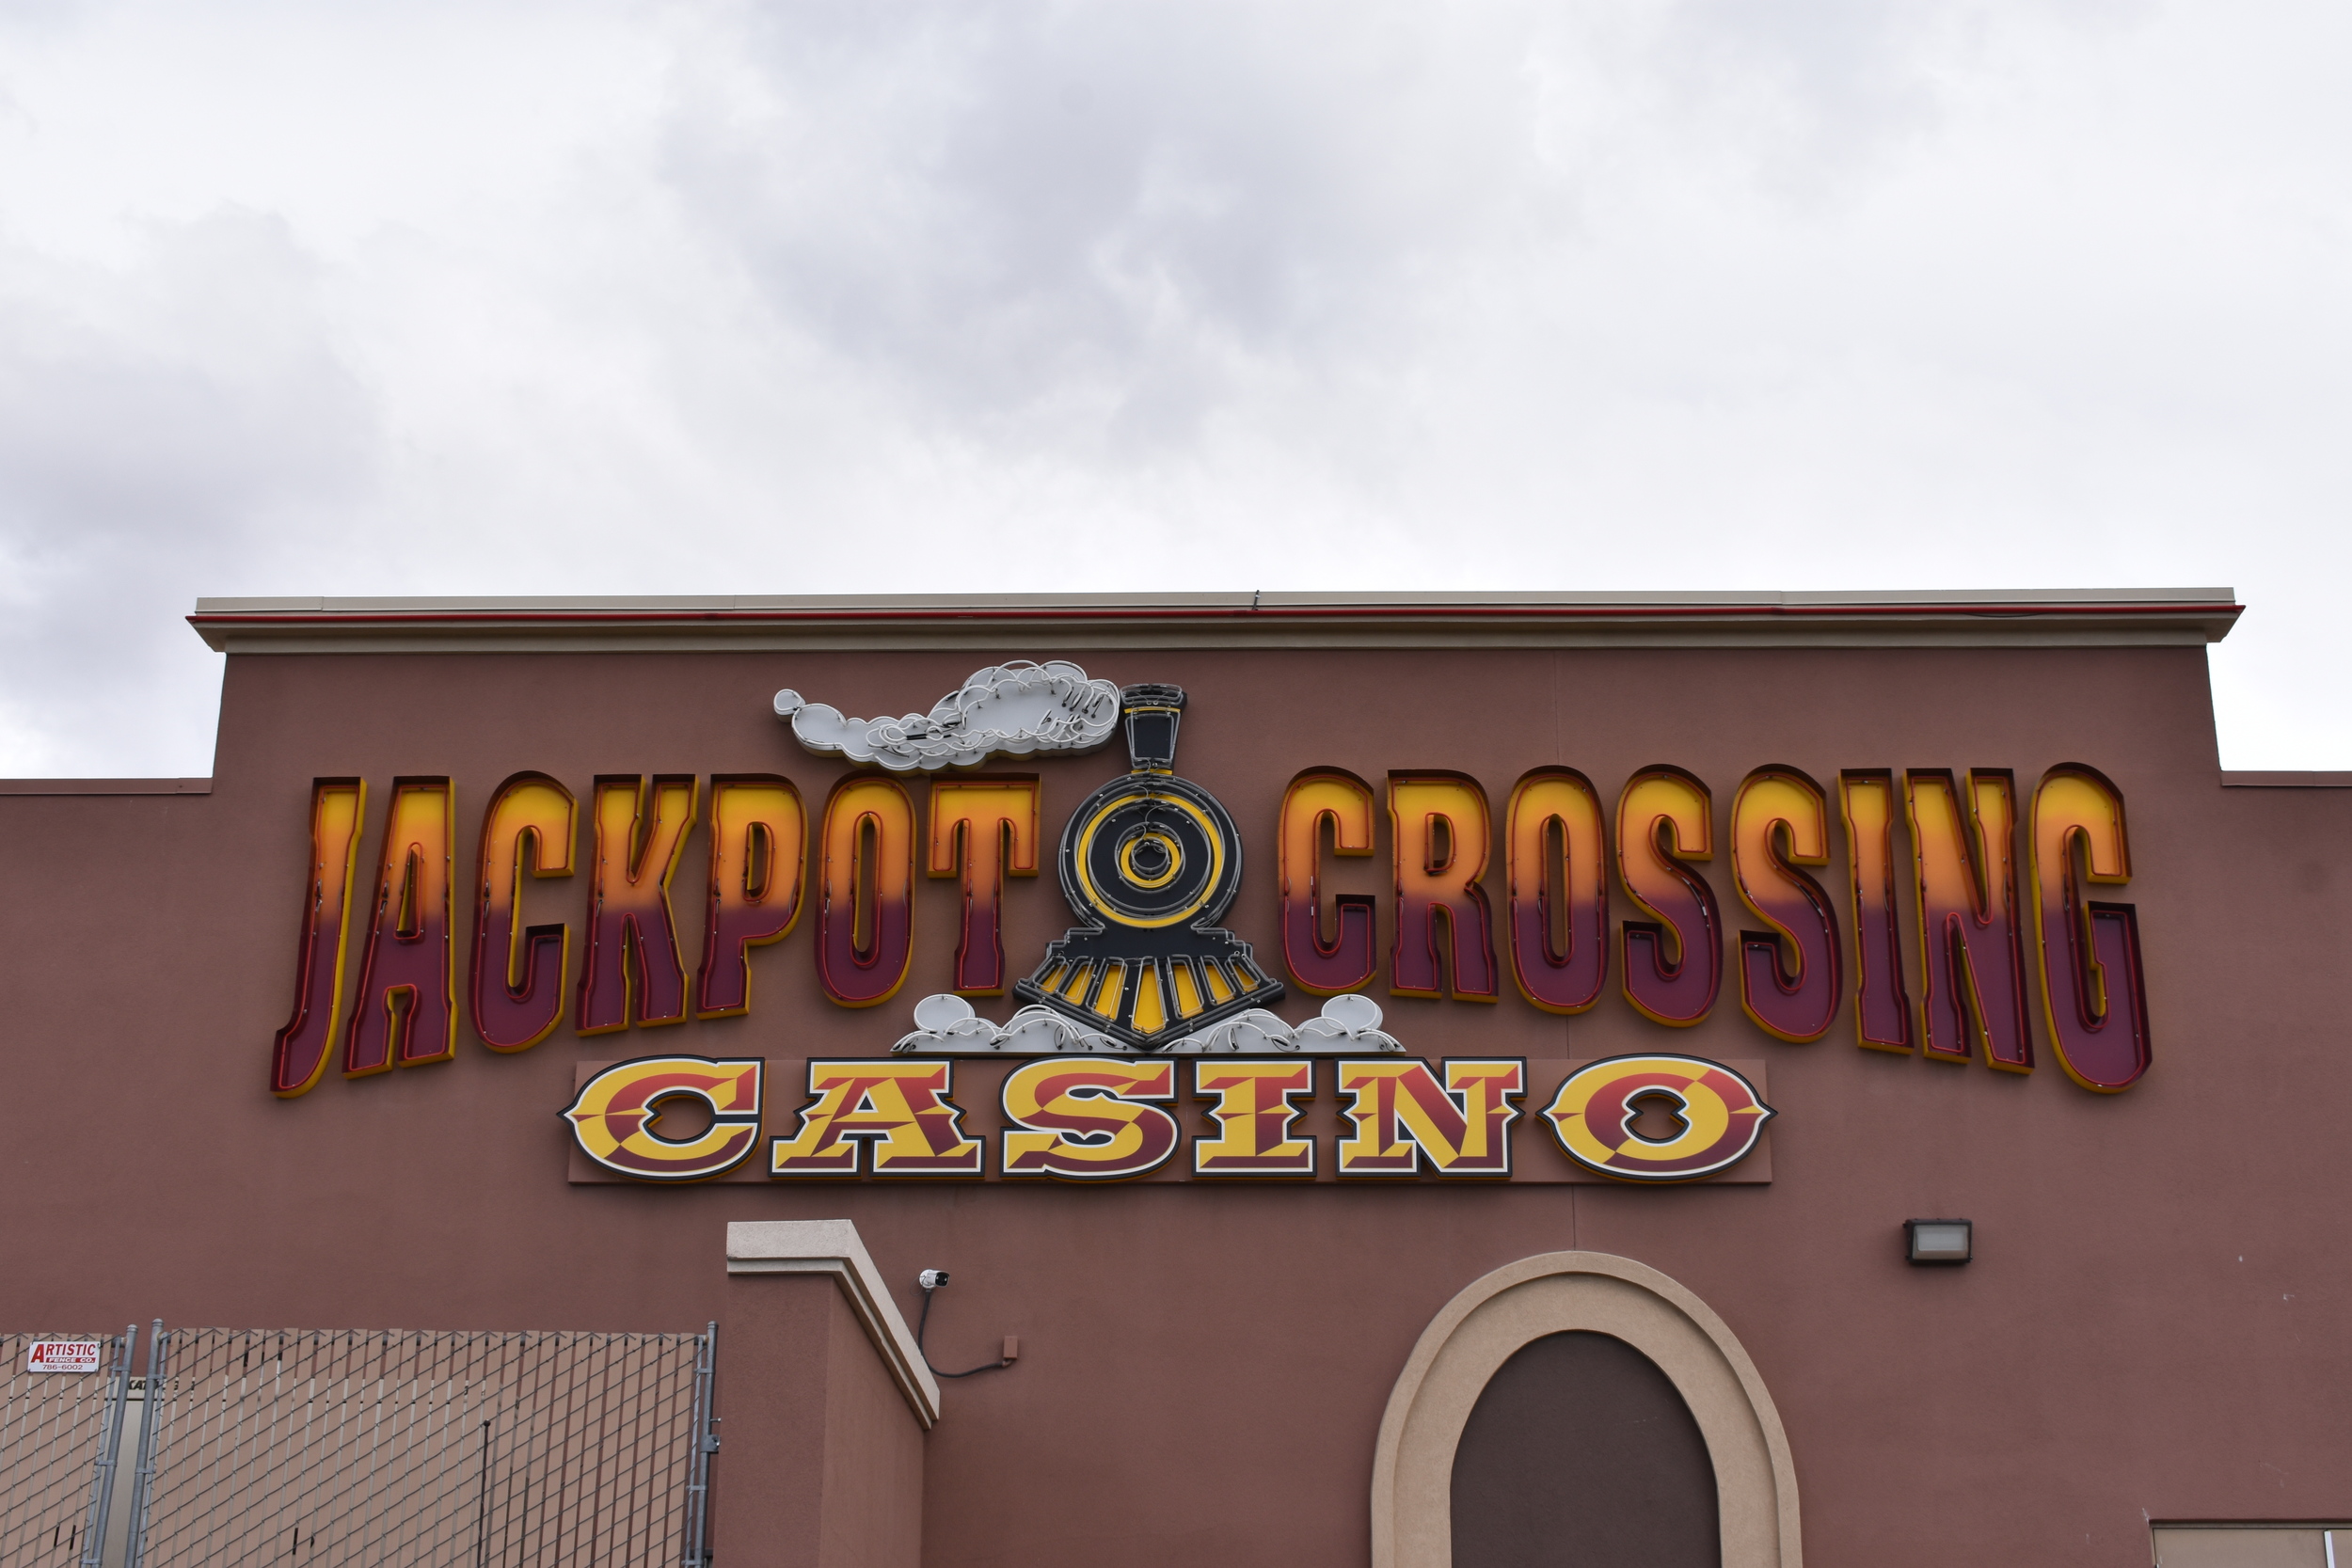 Jackpot Crossing Casino wall mounted sign, Fernley, Nevada